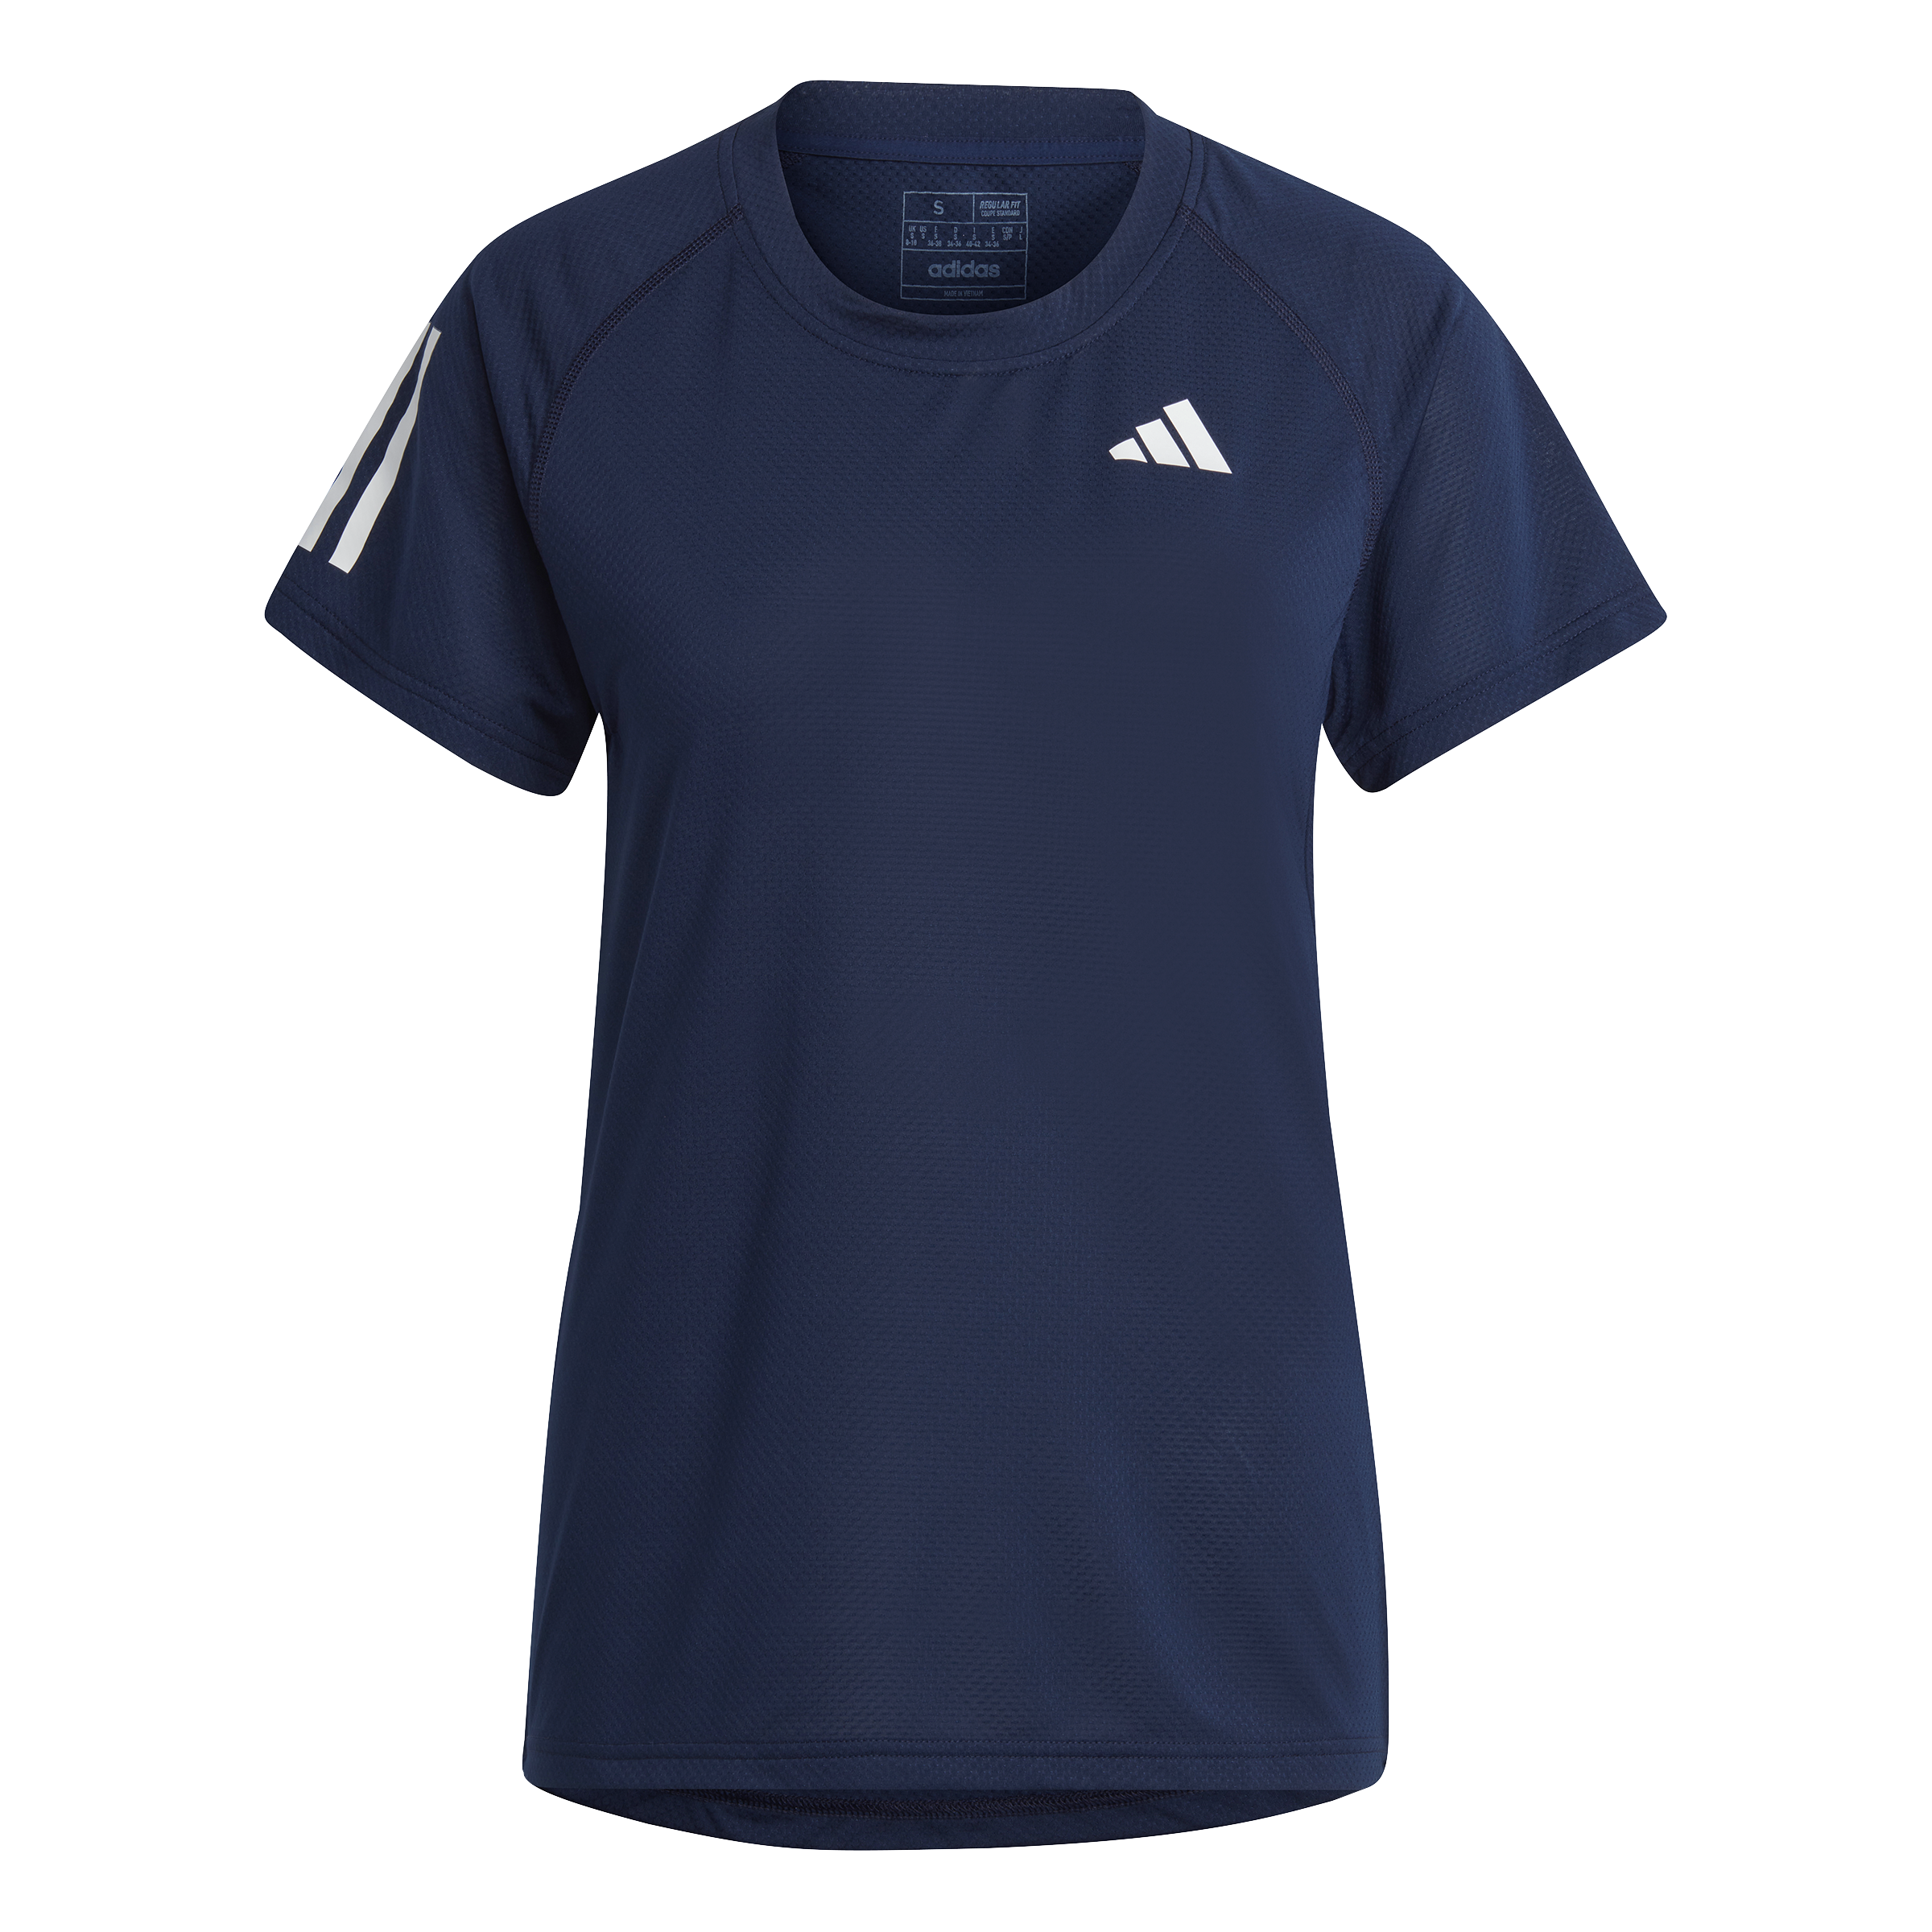 Adidas Club T-shirt Women (Navy) - L